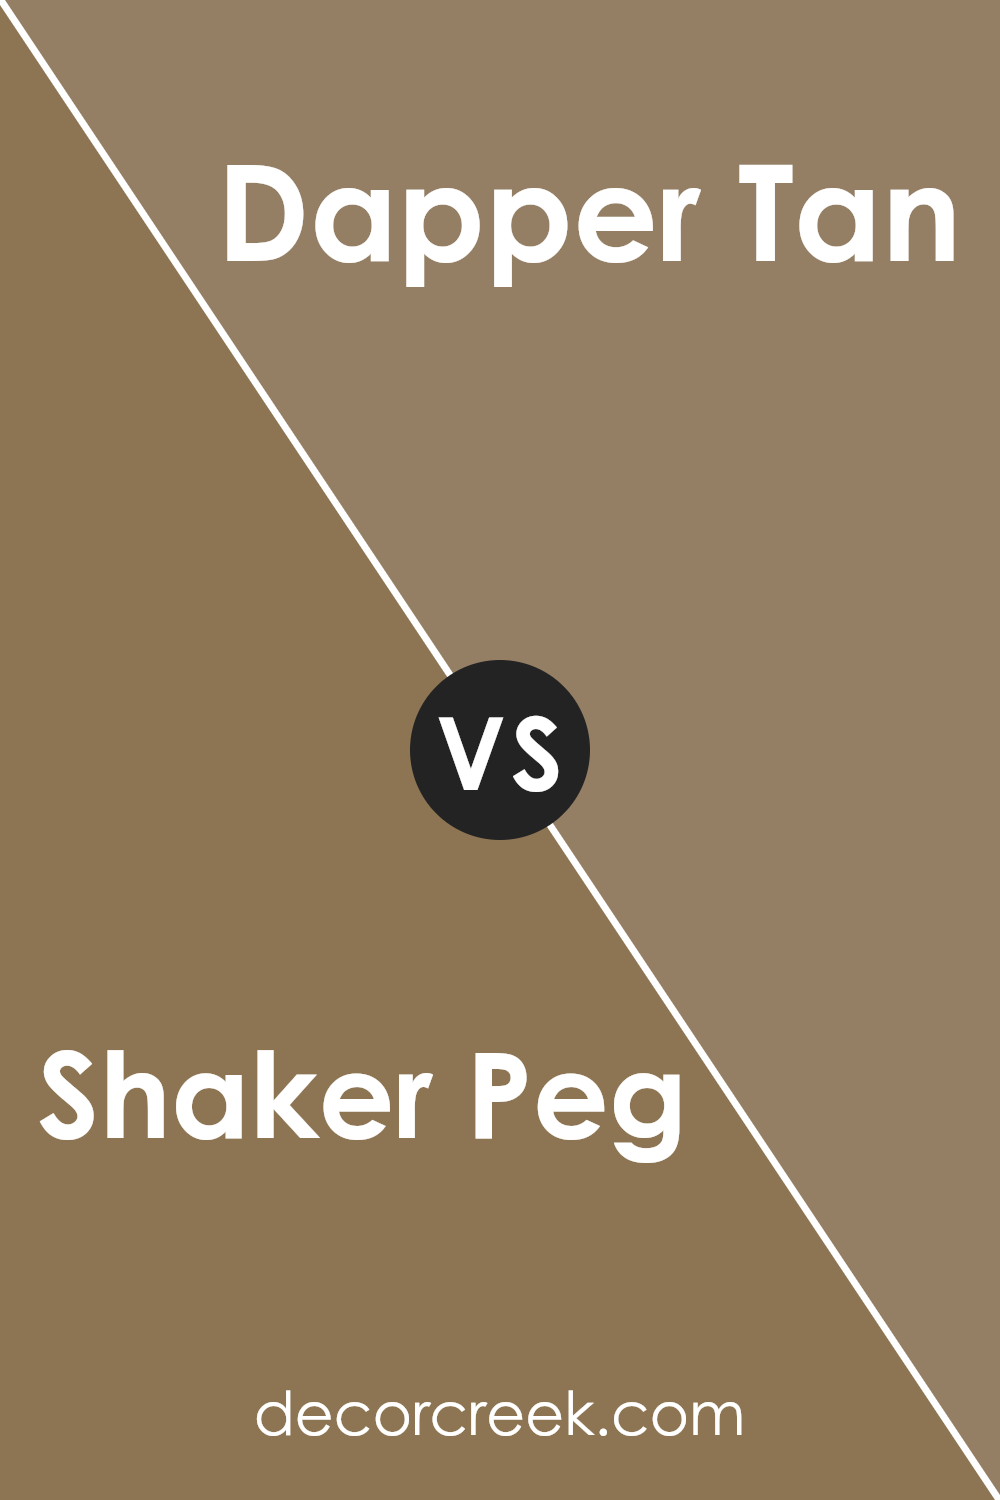 shaker_peg_sw_9539_vs_dapper_tan_sw_6144